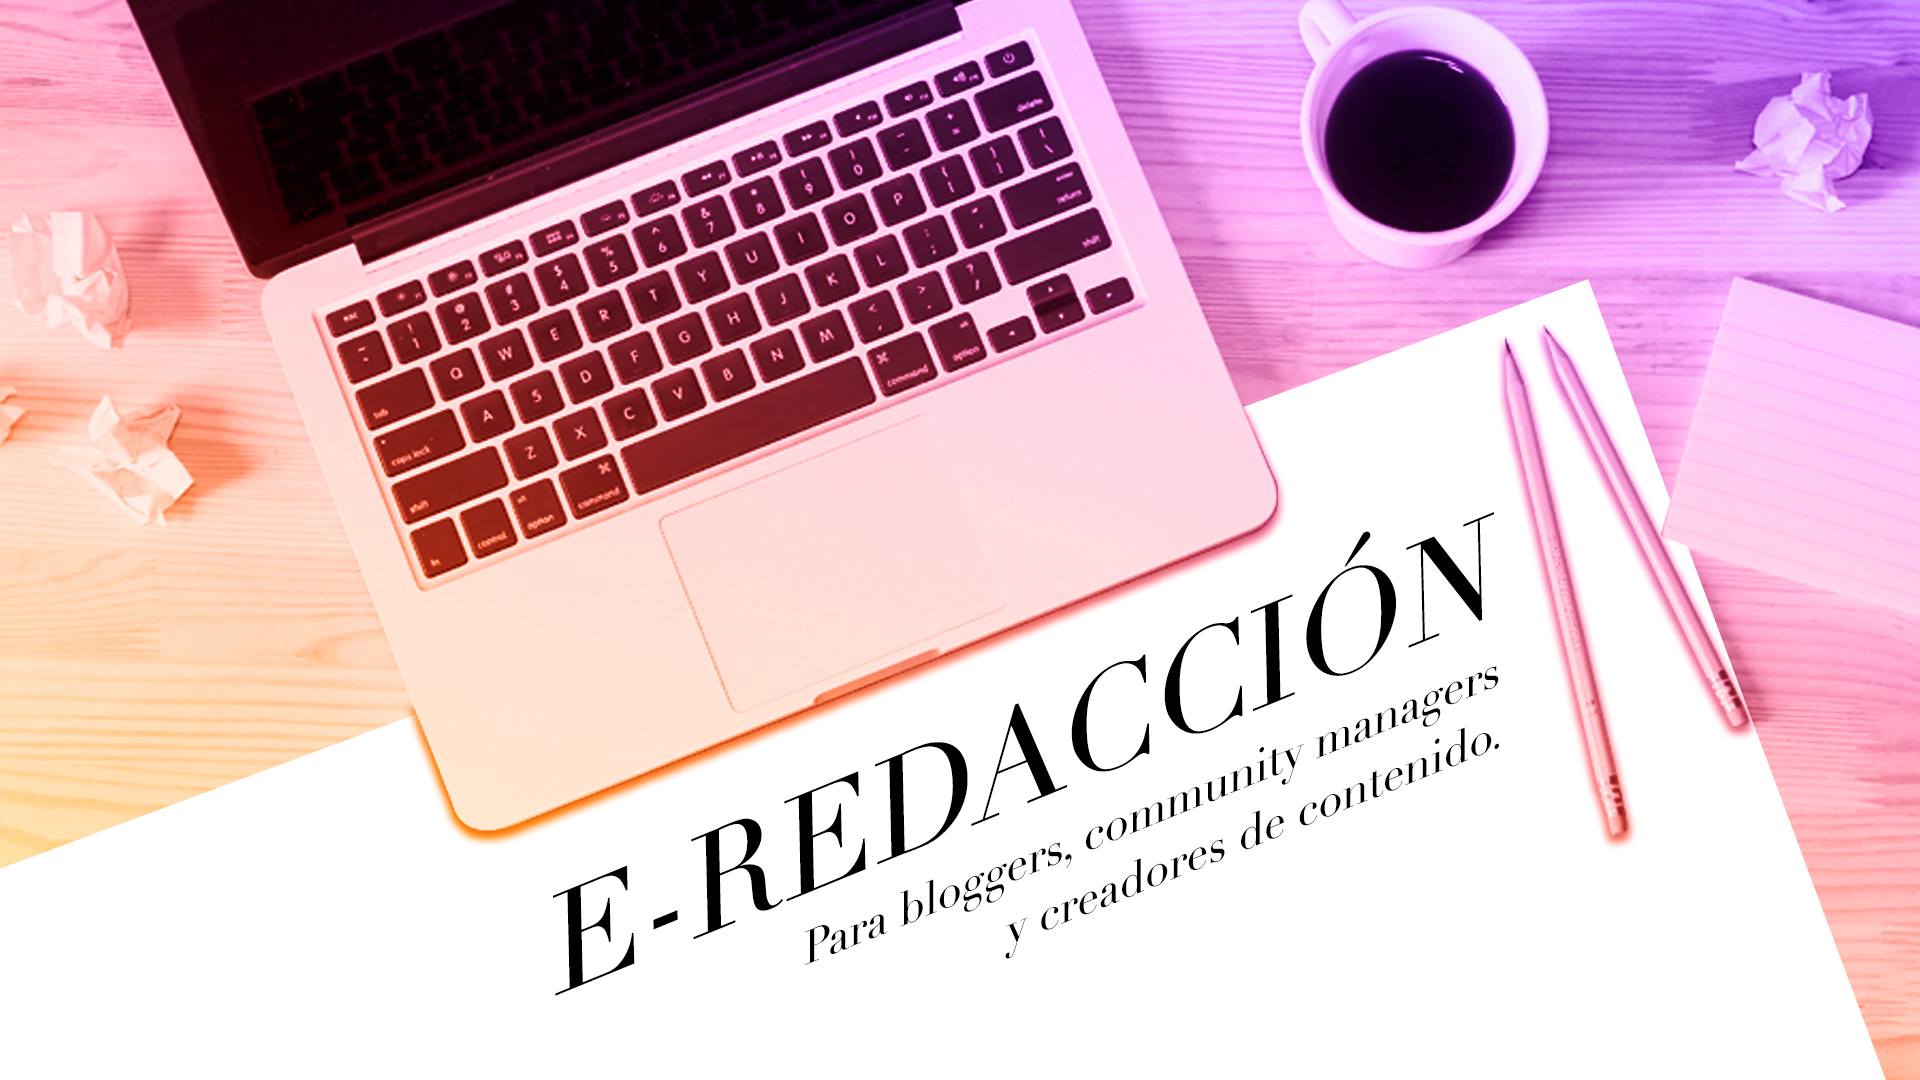 E-Redacción: Bloggers, community managers